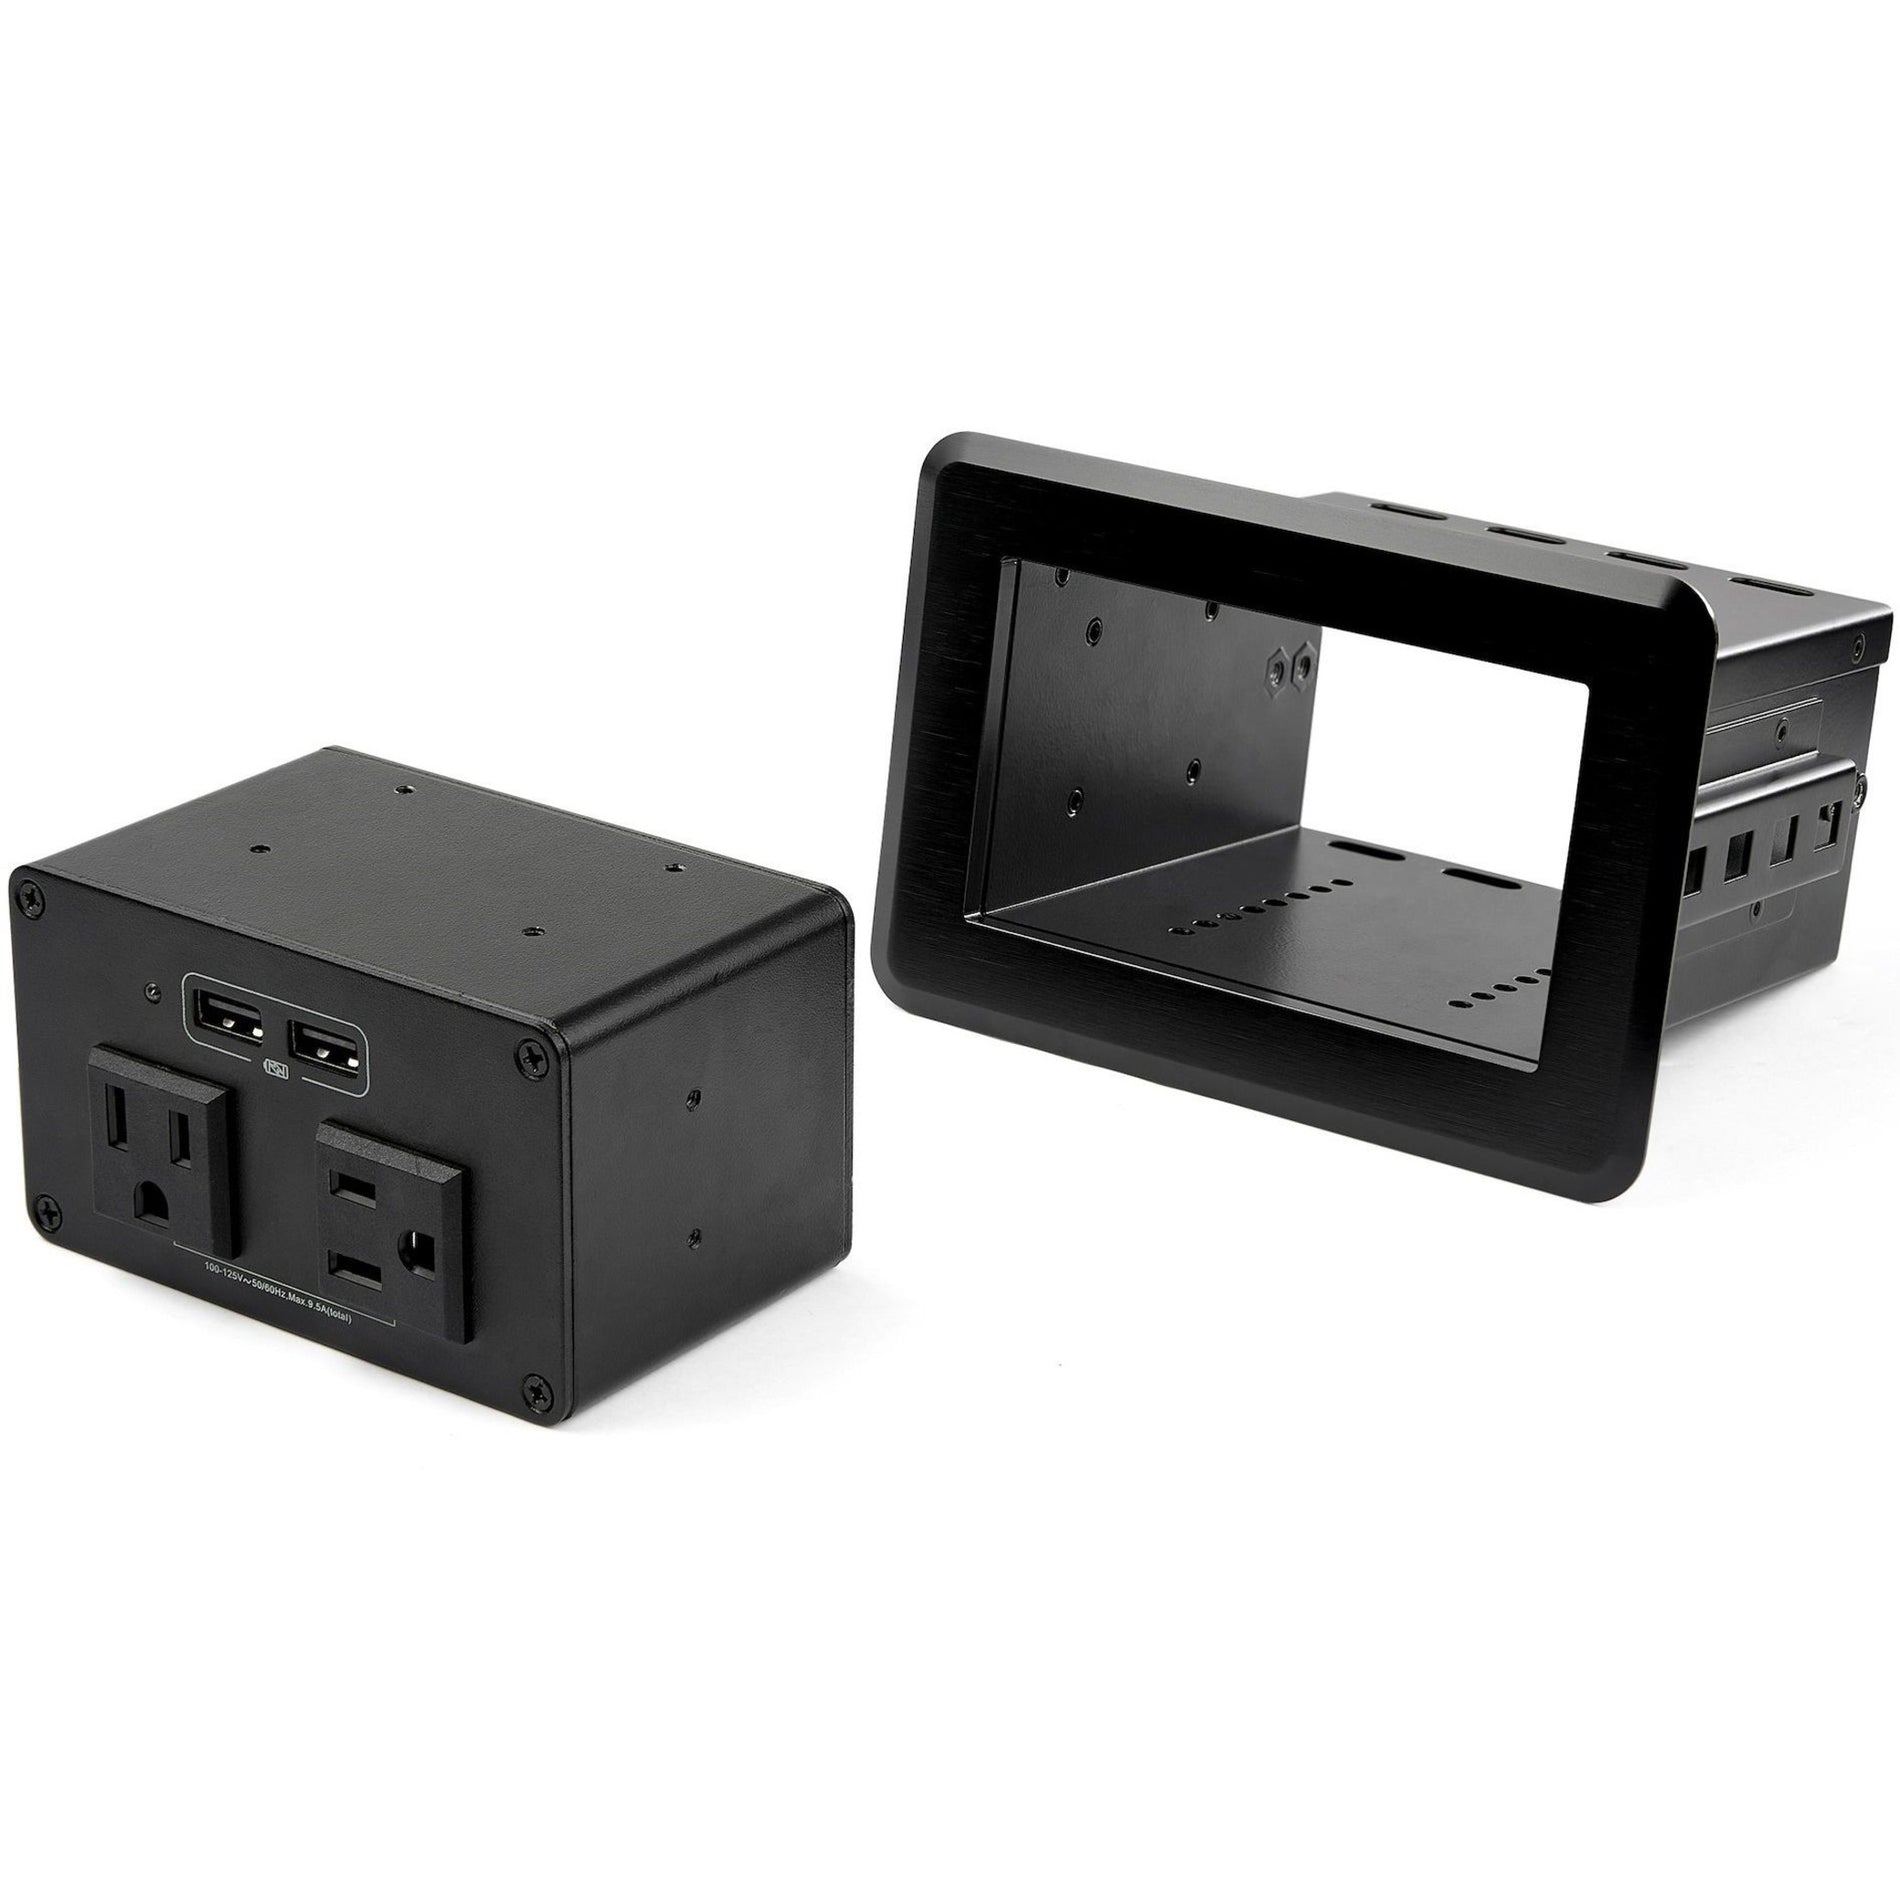 StarTech.com KITBZPOWNA Power Outlet, 2 USB Ports, 4 Receptacles, Tabletop/Desk Mountable, Black